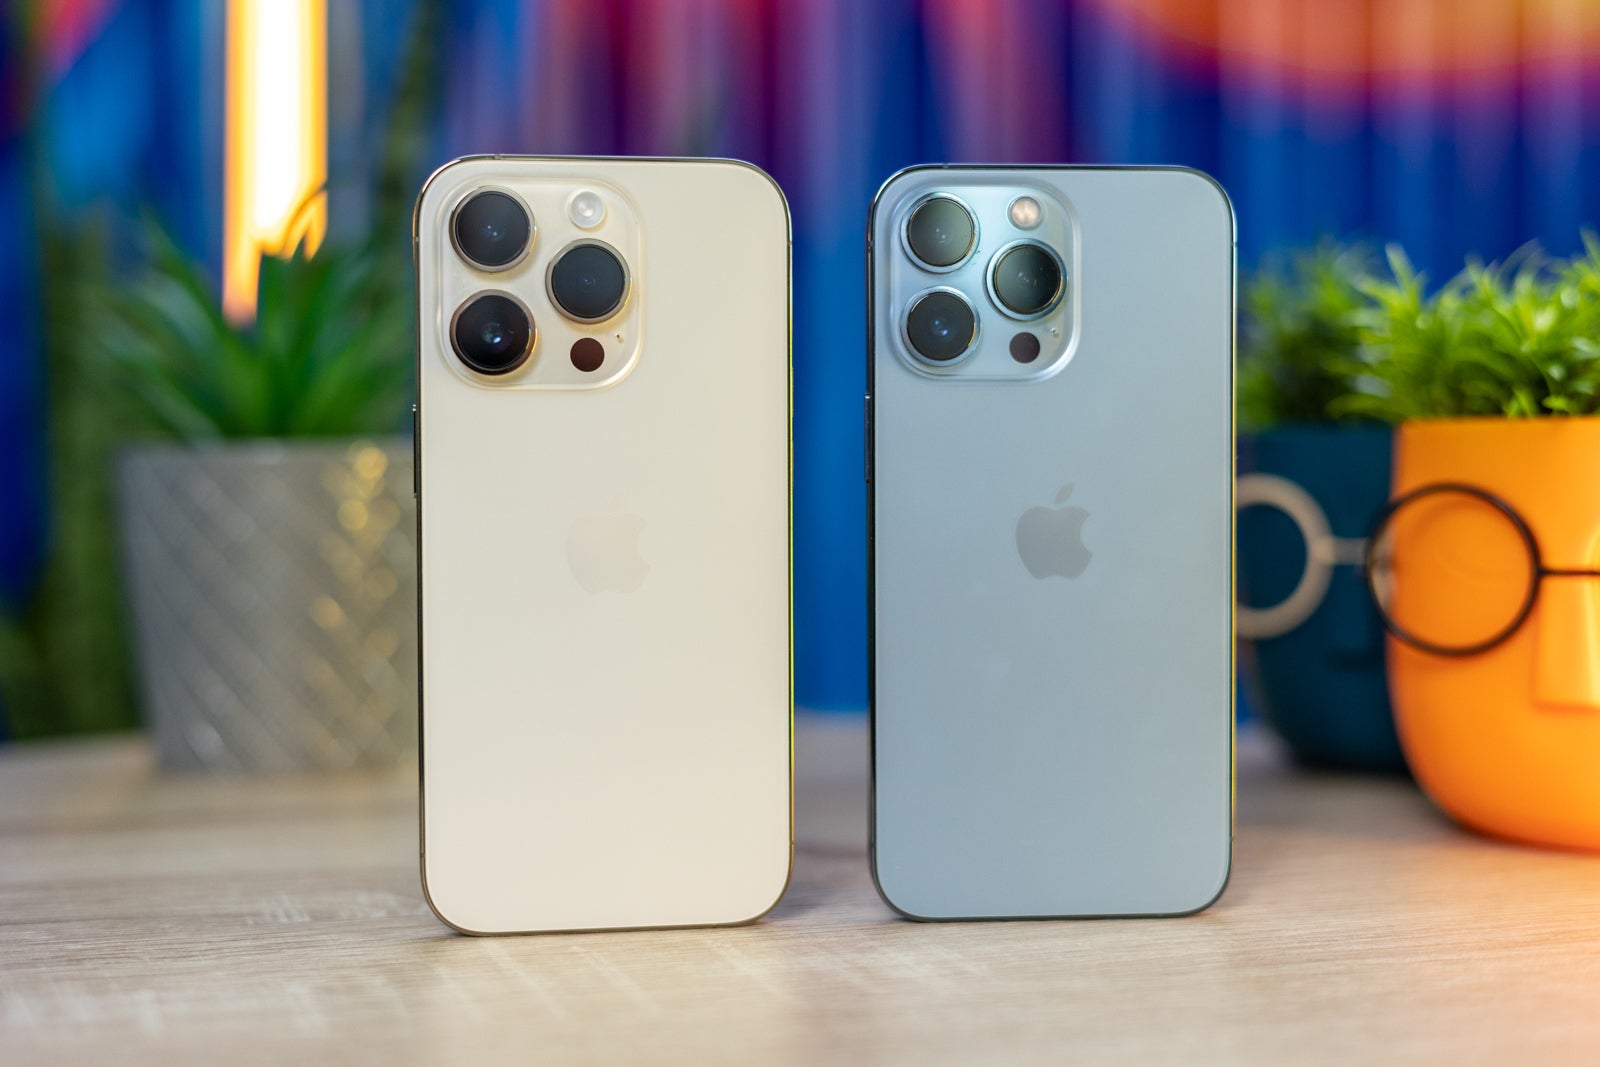 (Crédito da imagem - Phonearena) iPhone 14 Pro vs 13 Pro Design - iPhone 14 Pro vs iPhone 13 Pro: Principais diferenças